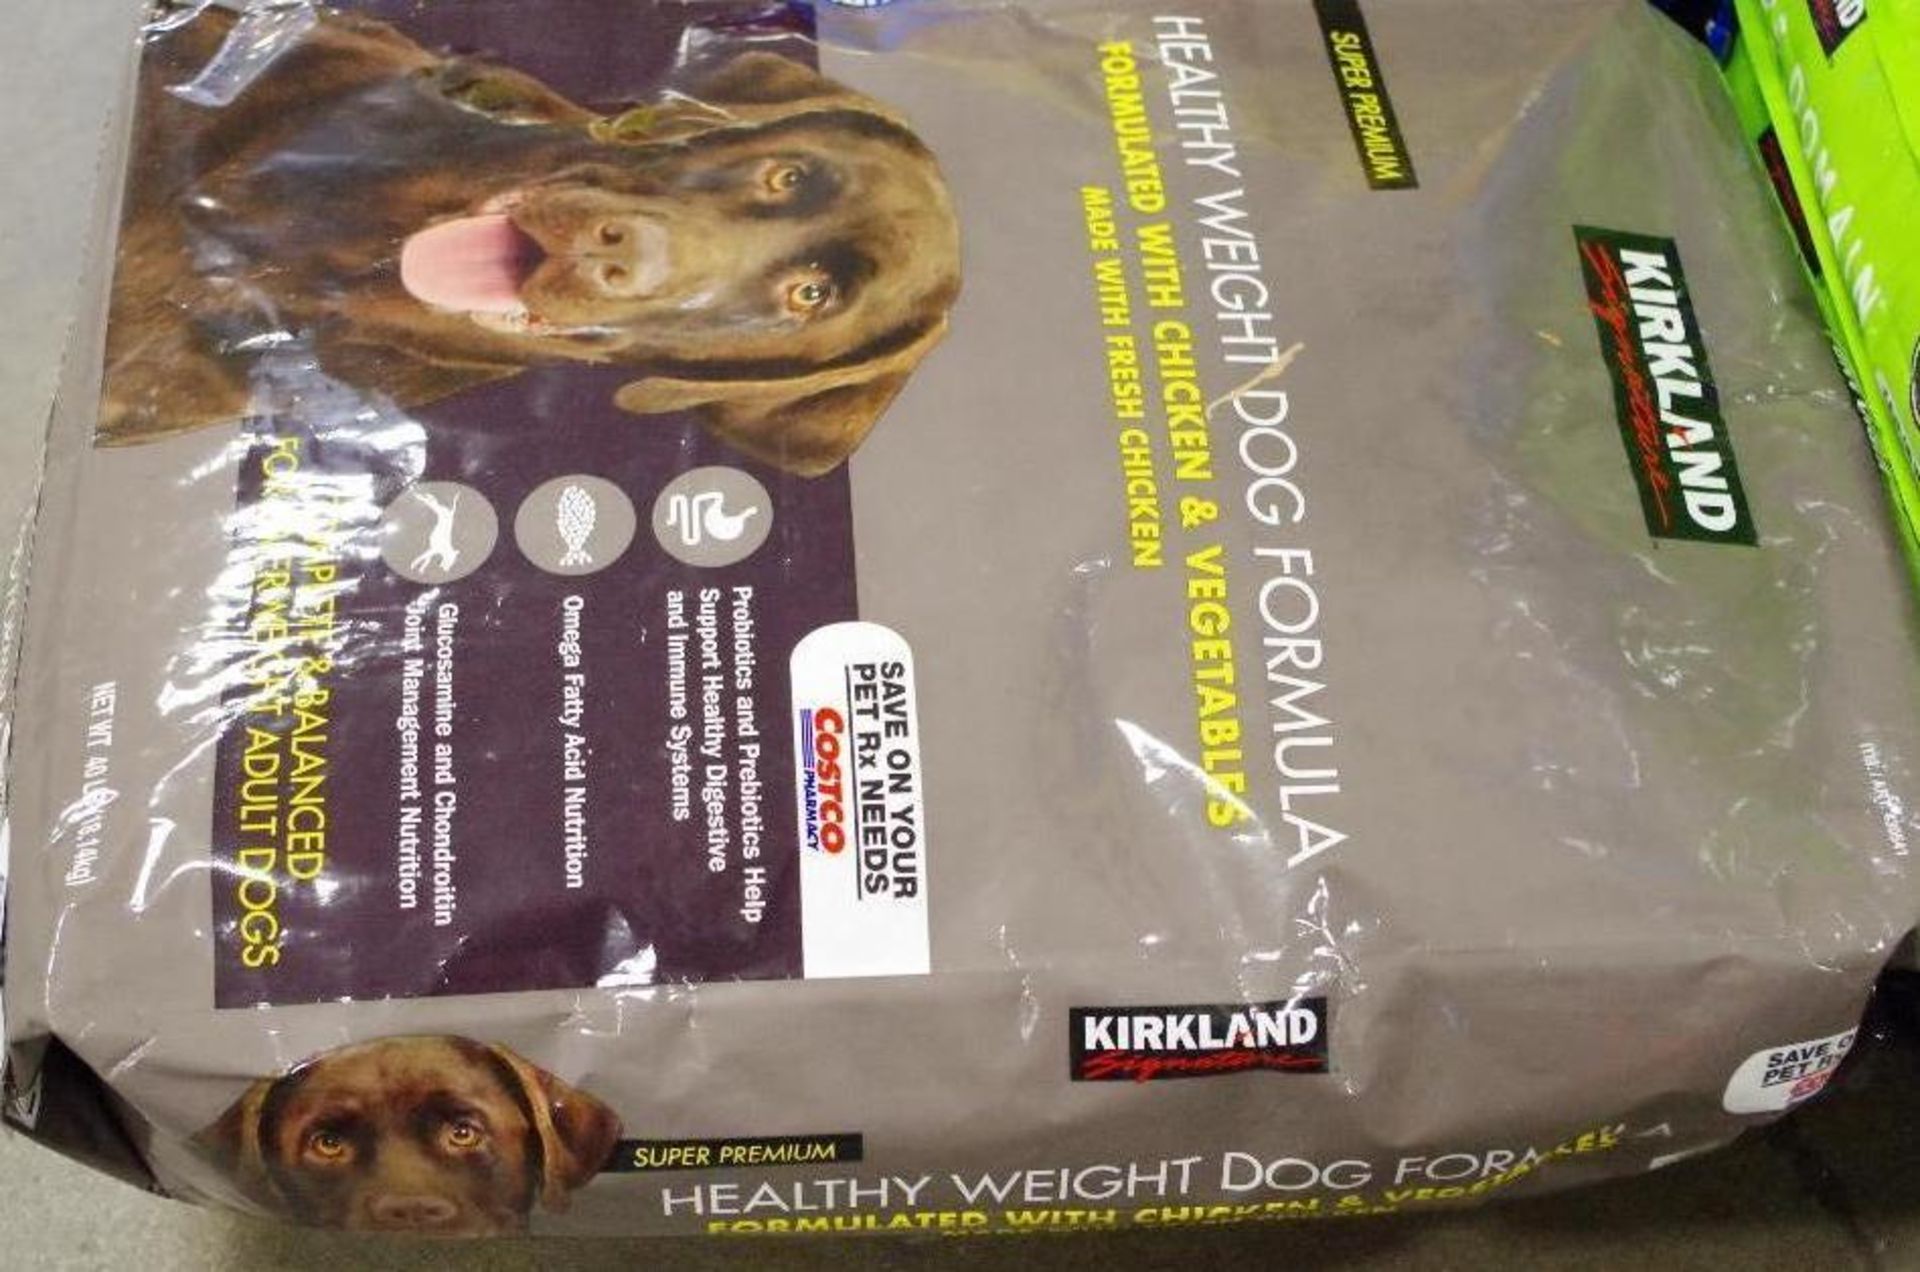 KIRKLAND SUPER PREMIUM 40-lbs. Healthy Weight Dog Food Bag - Image 3 of 4